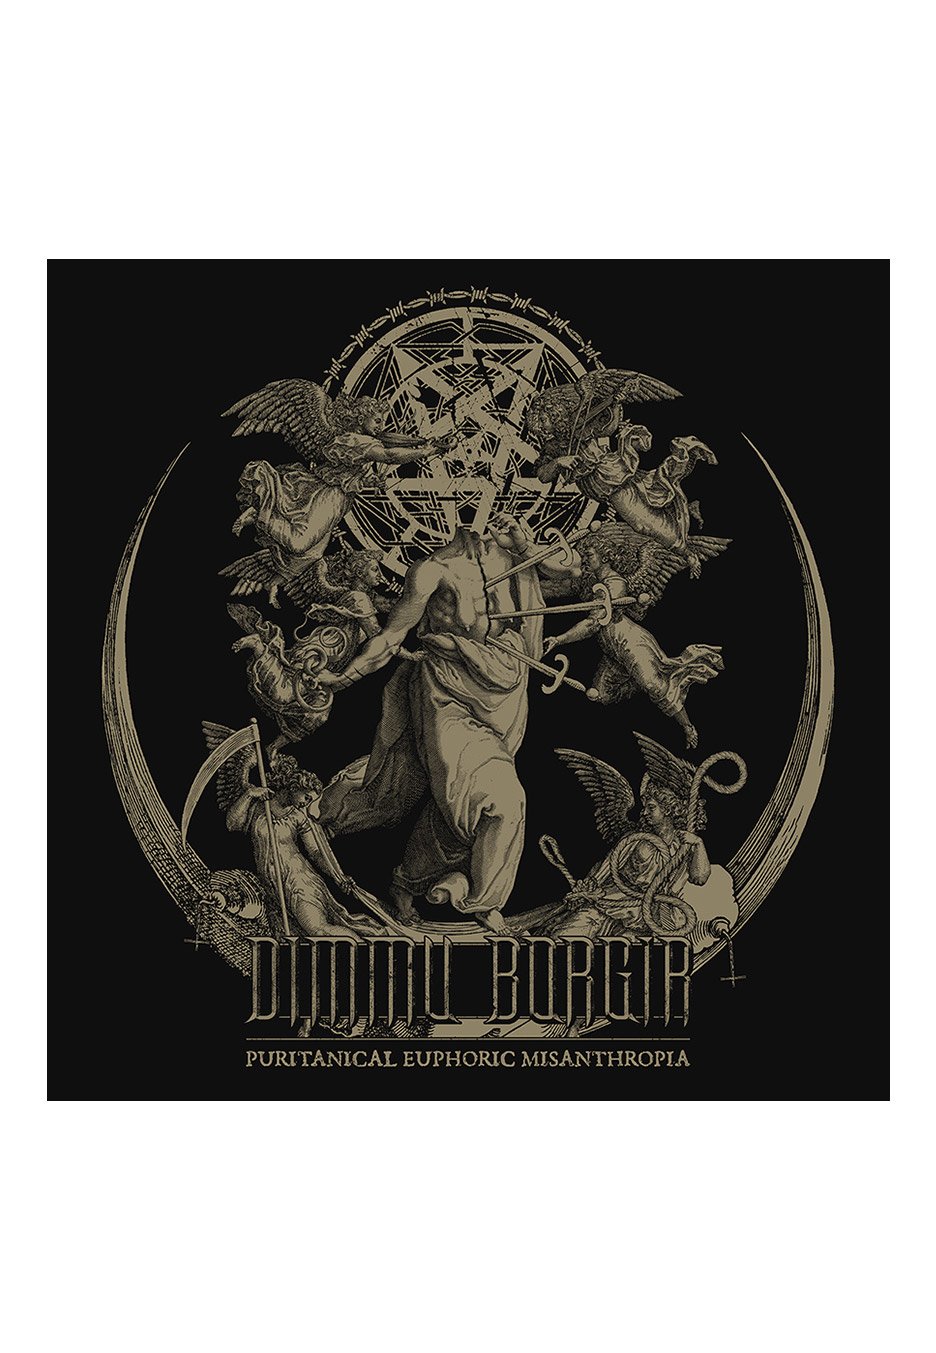 Dimmu Borgir - Puritanical Euphoric Misanthropia (Remastered) - Digipak 3 CD